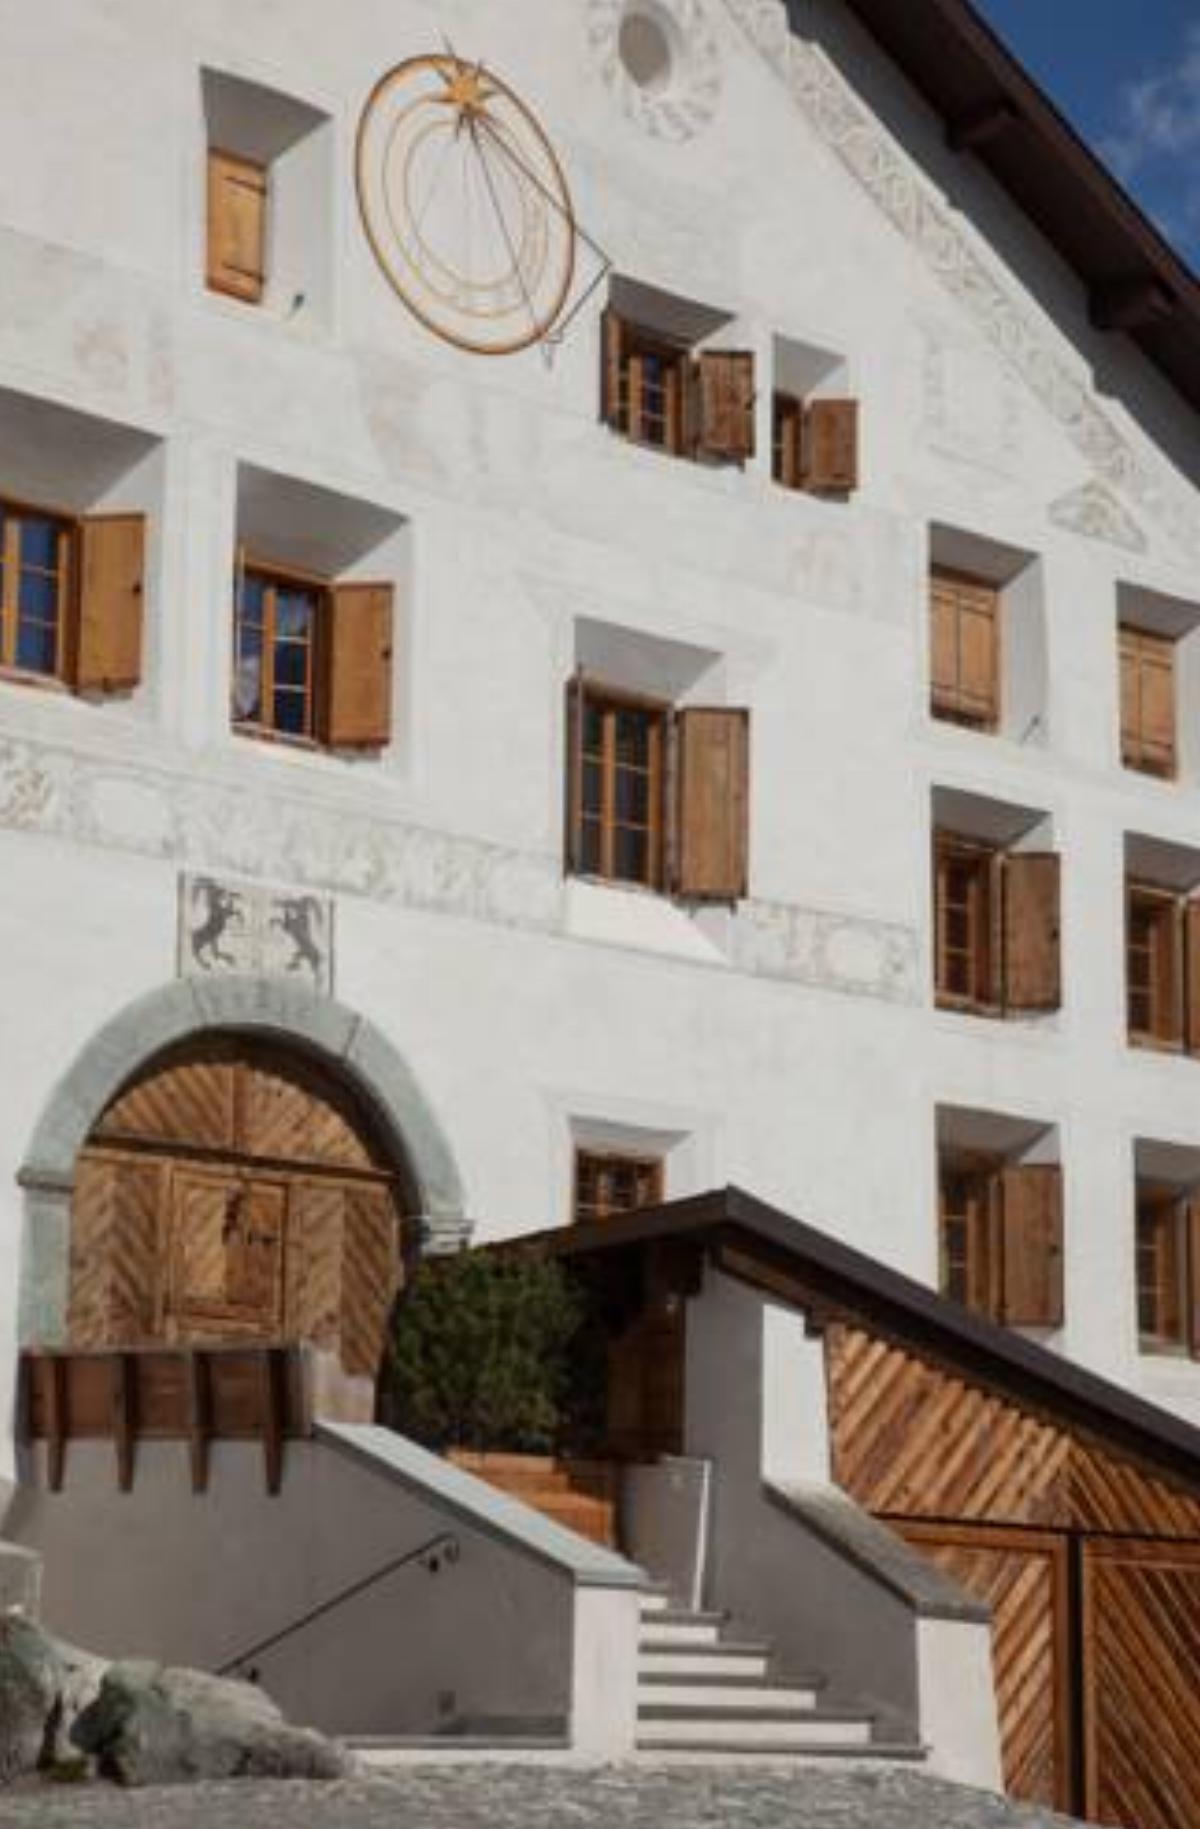 Ches'Ota Hotel La Punt-Chamues-ch Switzerland